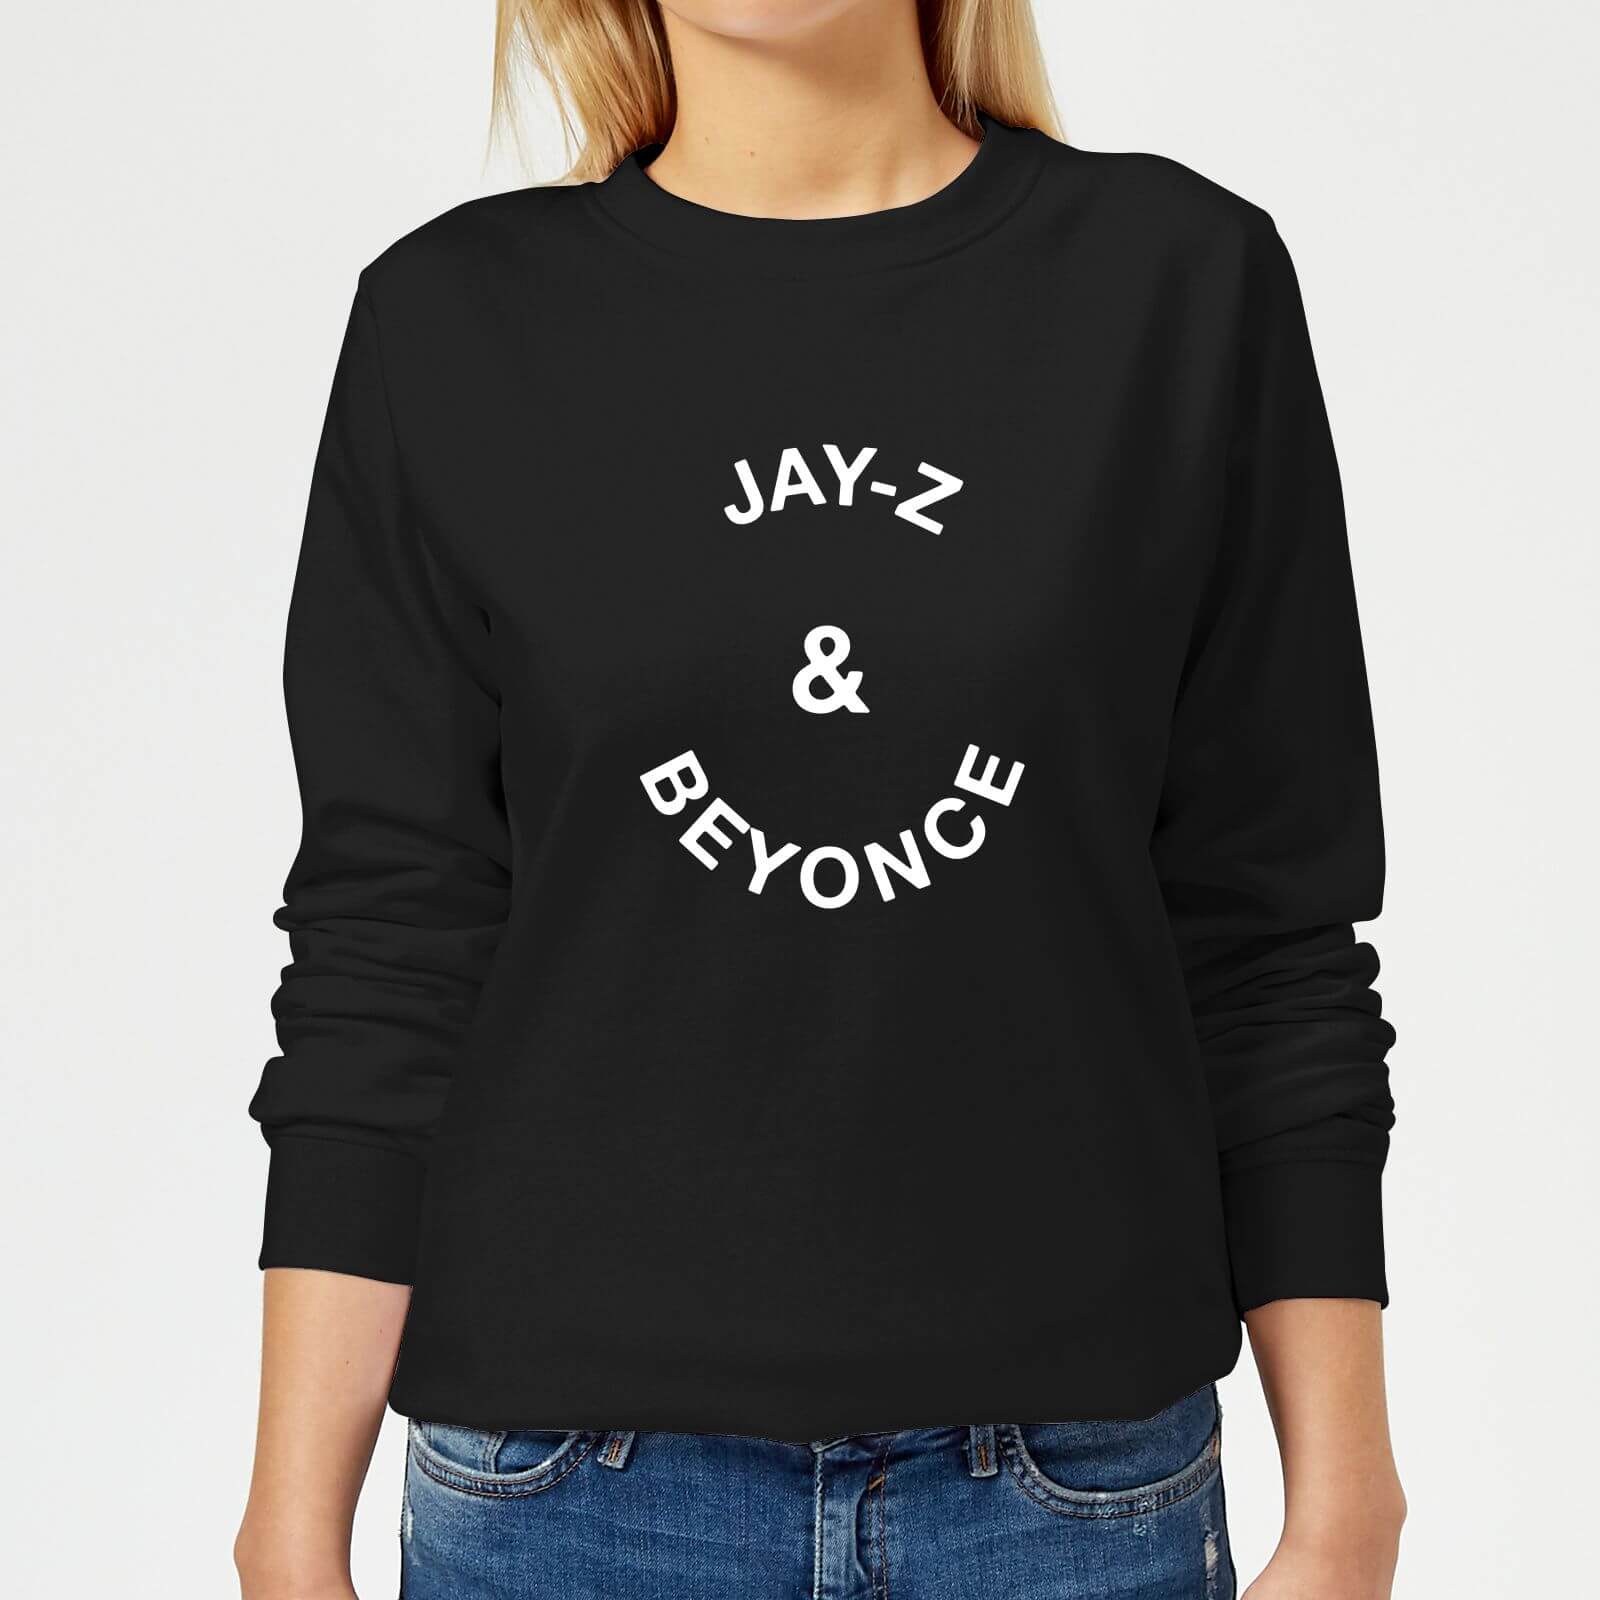 Jay-Z & Beyonce Women's Sweatshirt - Black - L - Black